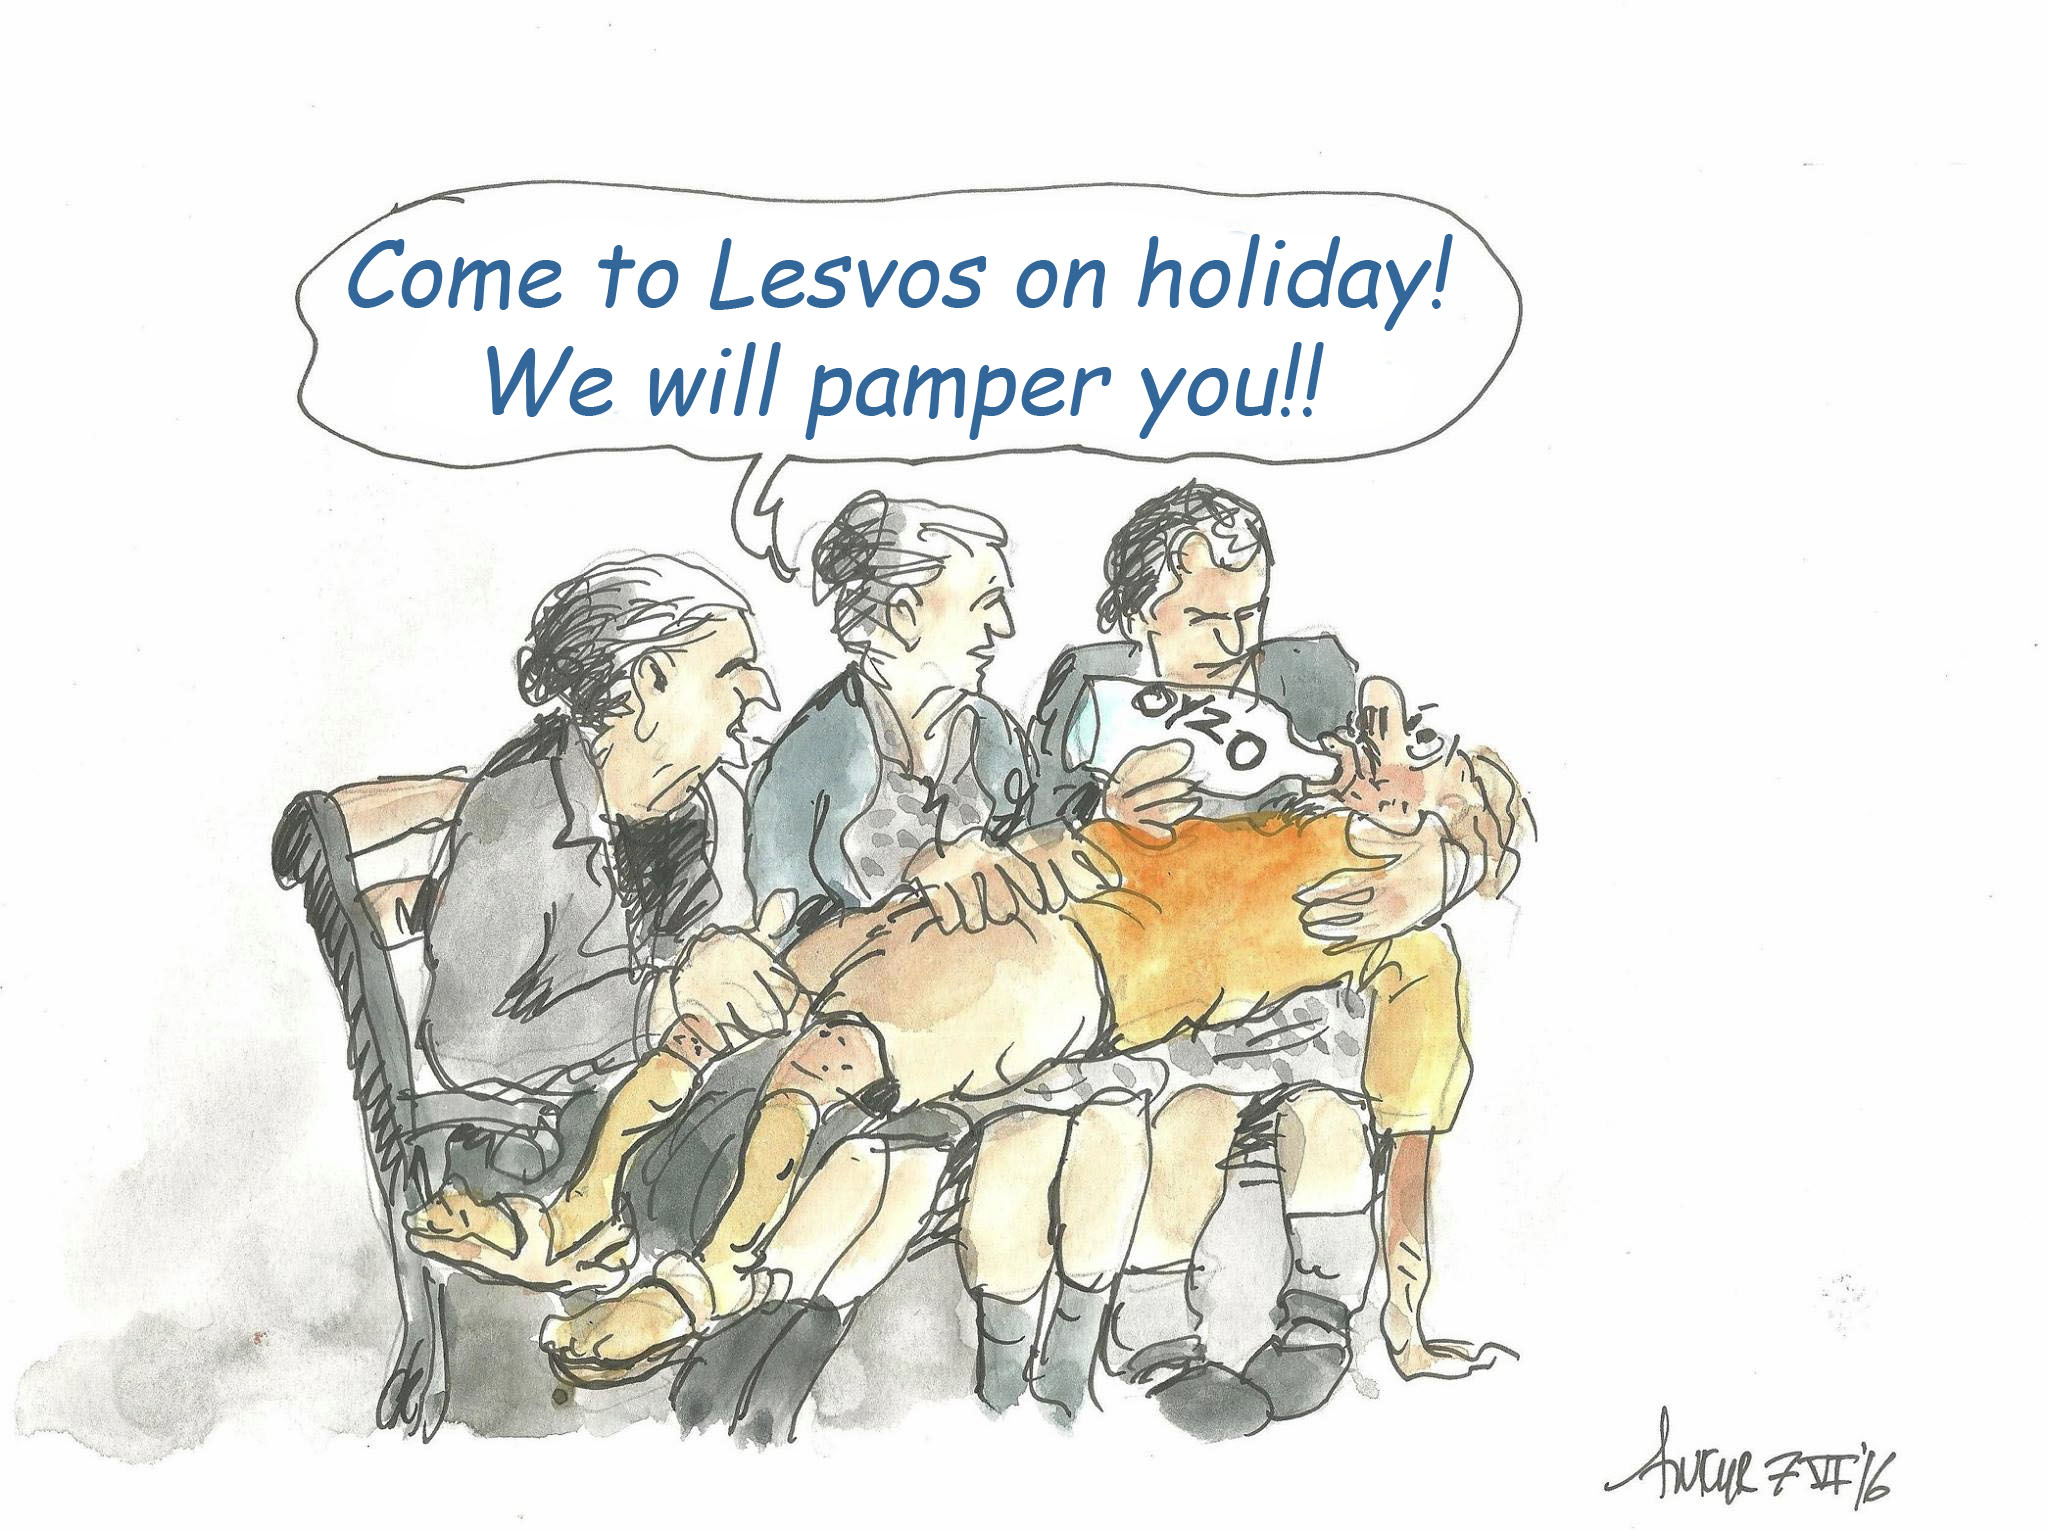 AnKyr's Lesvos holiday